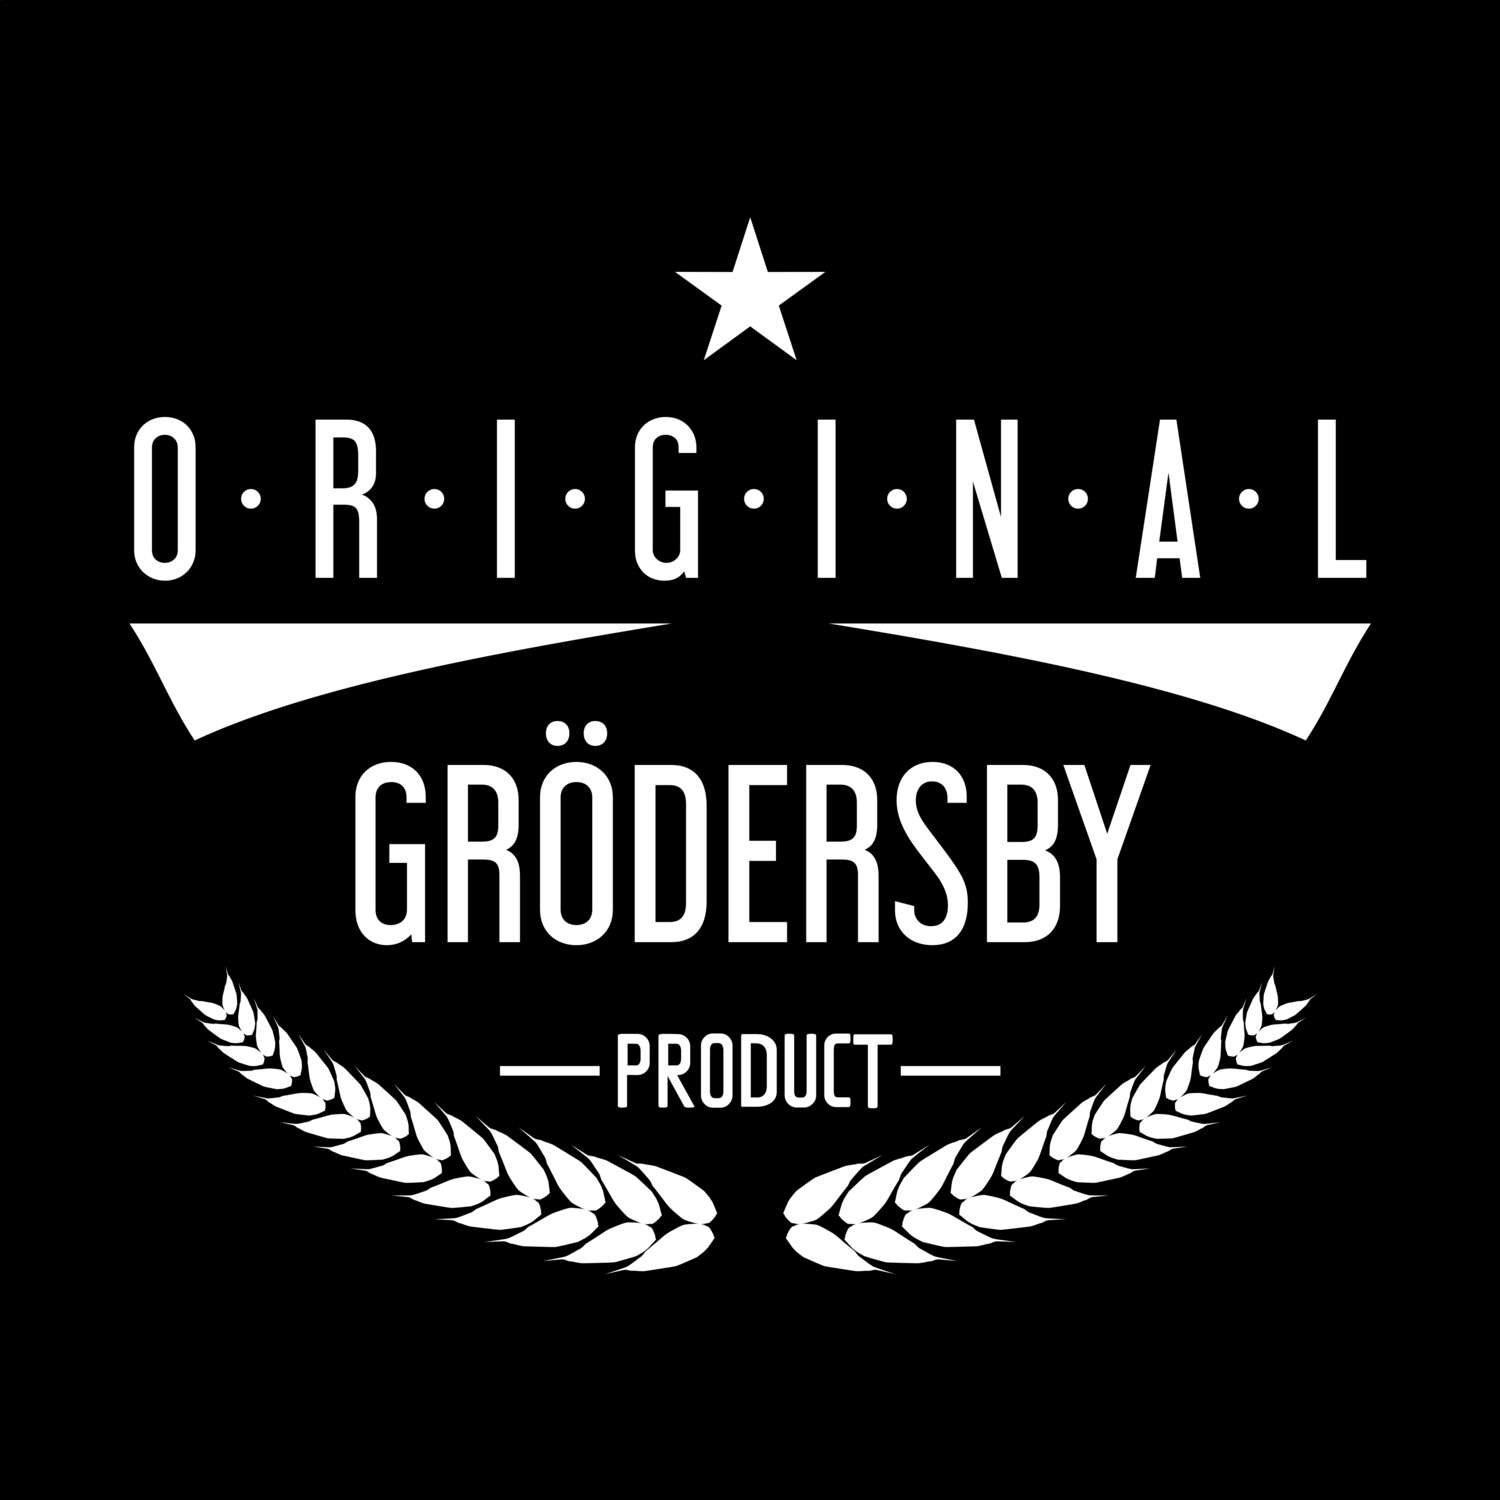 Grödersby T-Shirt »Original Product«